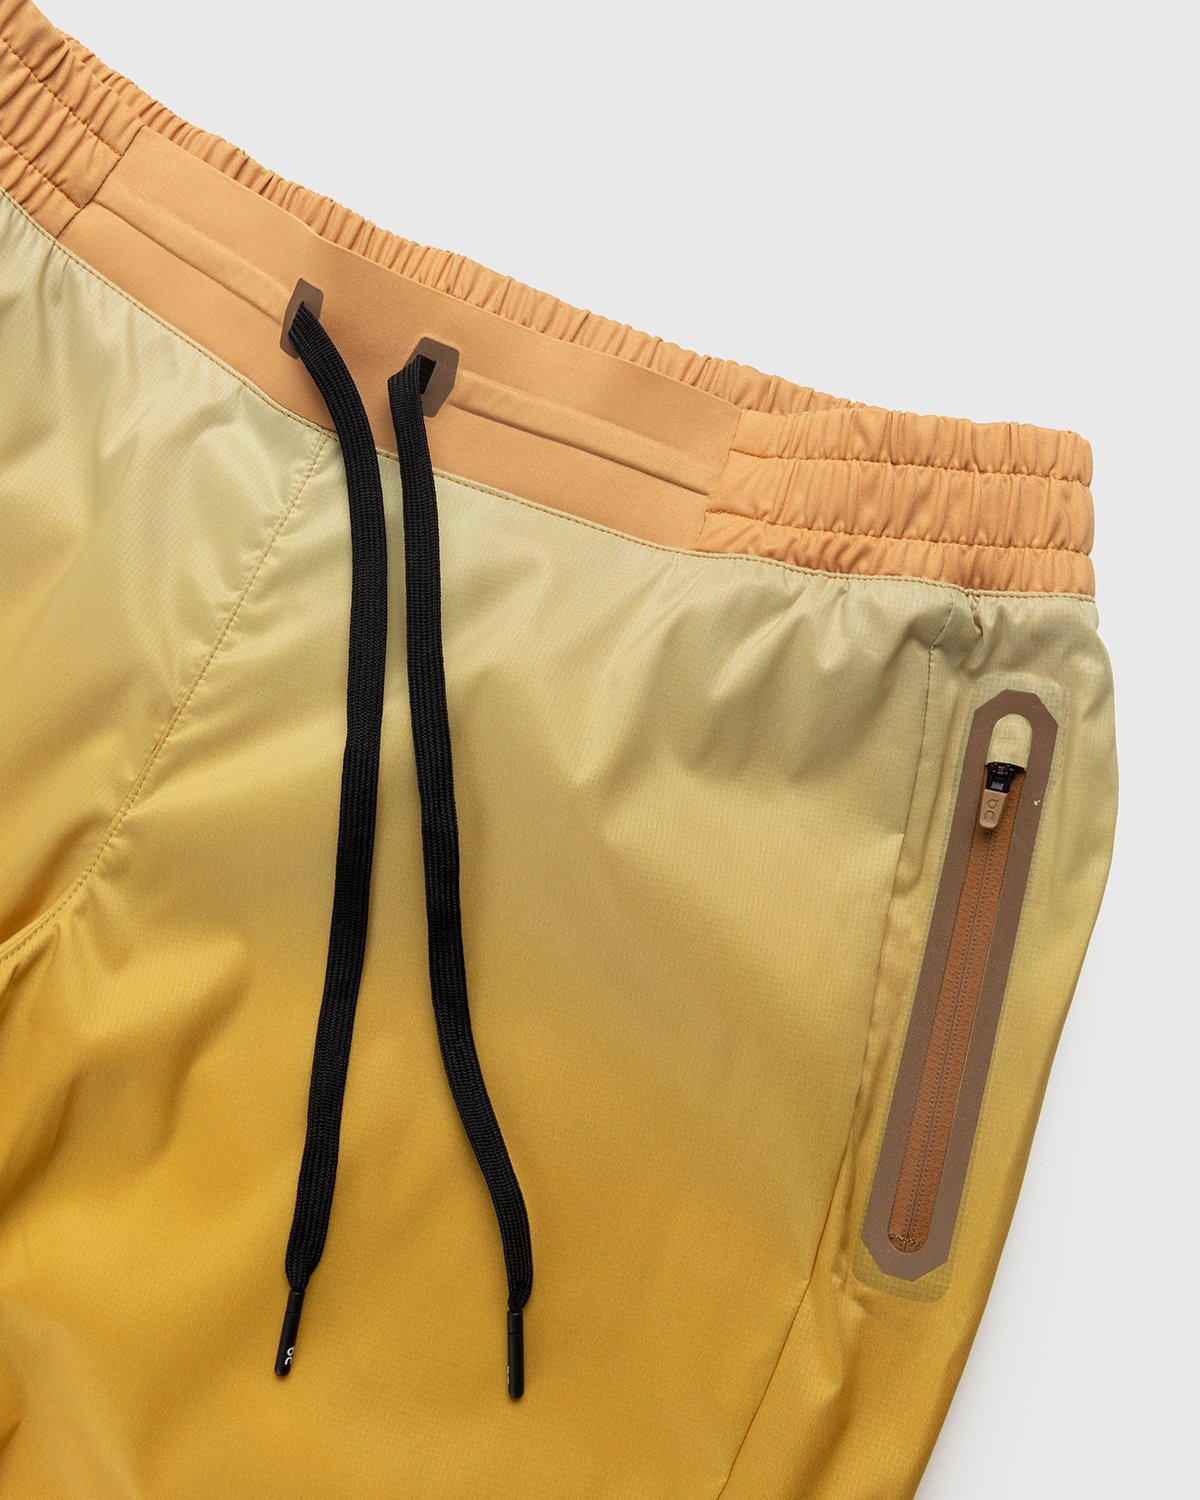 Loewe x On - Women's Technical Running Pants Gradient Orange - Clothing - Orange - Image 5